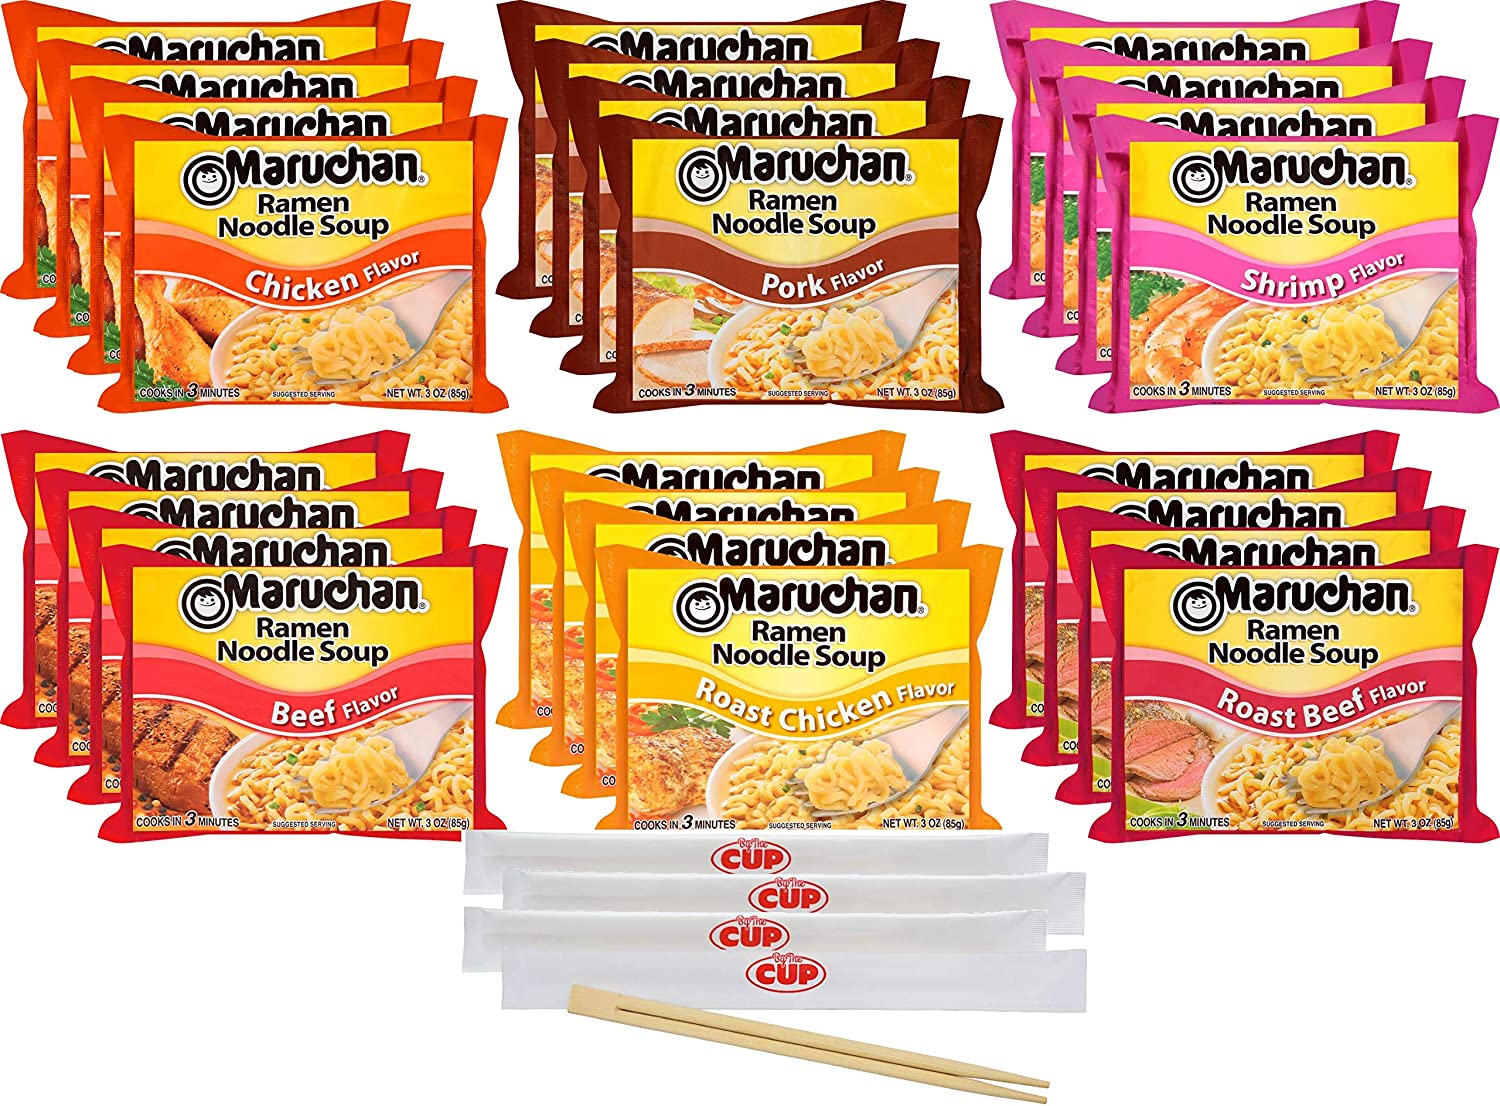 Maruchan Pork Flavor Ramen Noodle Soup 3 Oz 24-Pack, Many types Available